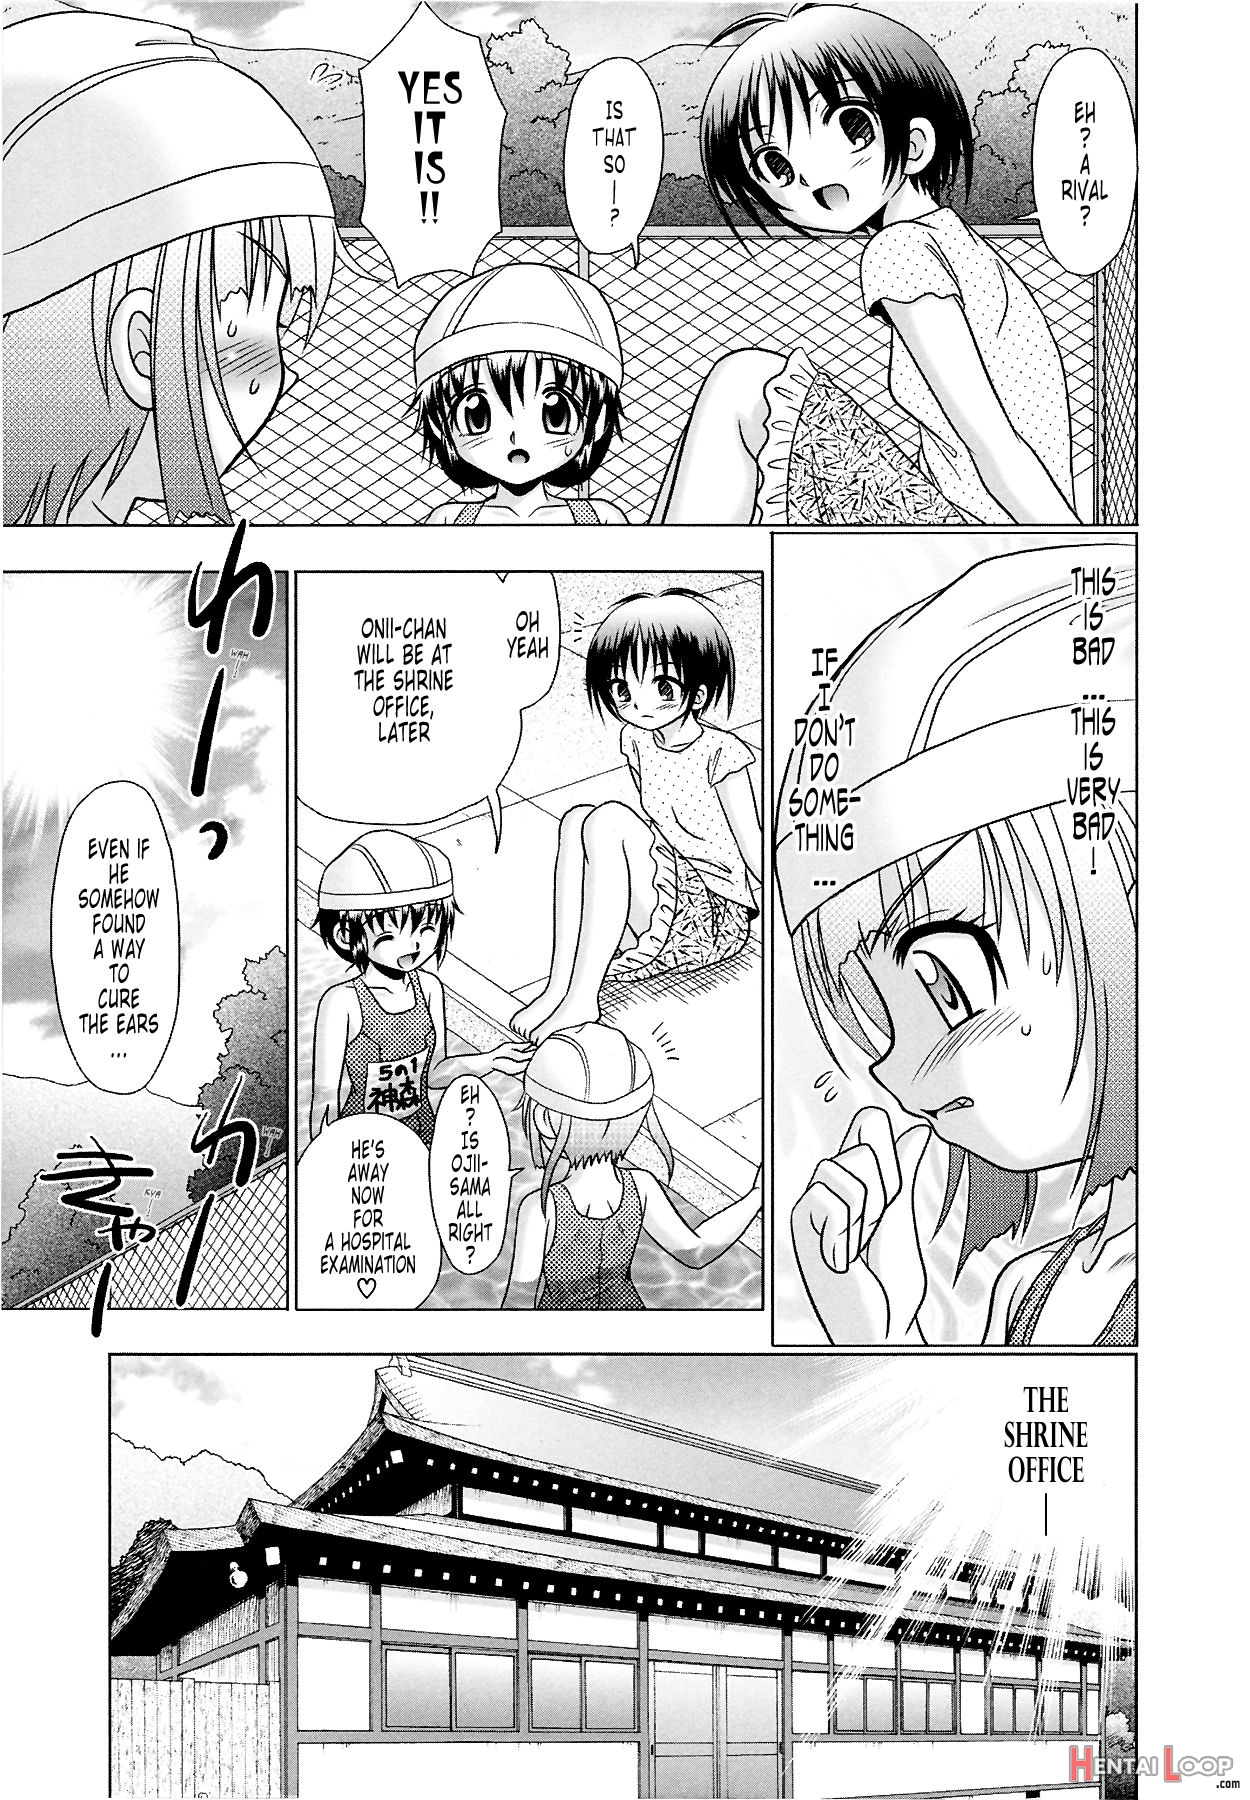 Tsukumimi 1&2 page 337